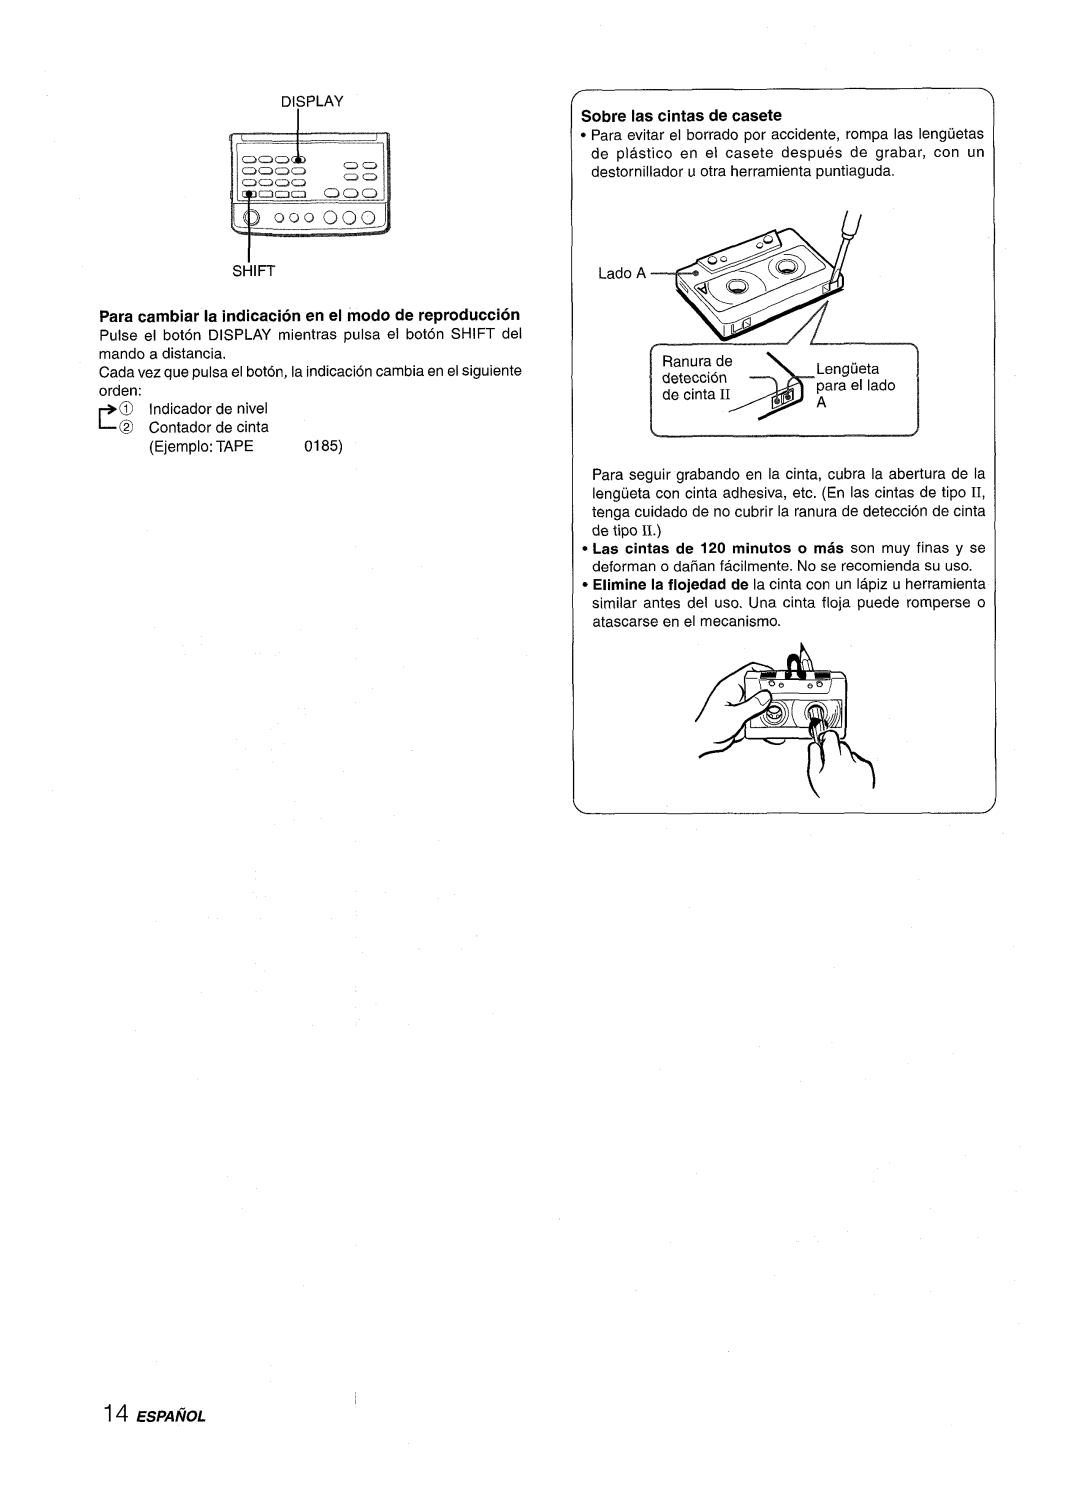 Aiwa XR-M88 manual 1+’“““ ‘“ 1“”””””””””””““‘, w a on.. ~ GE, Sobre Ias cintas de casete 